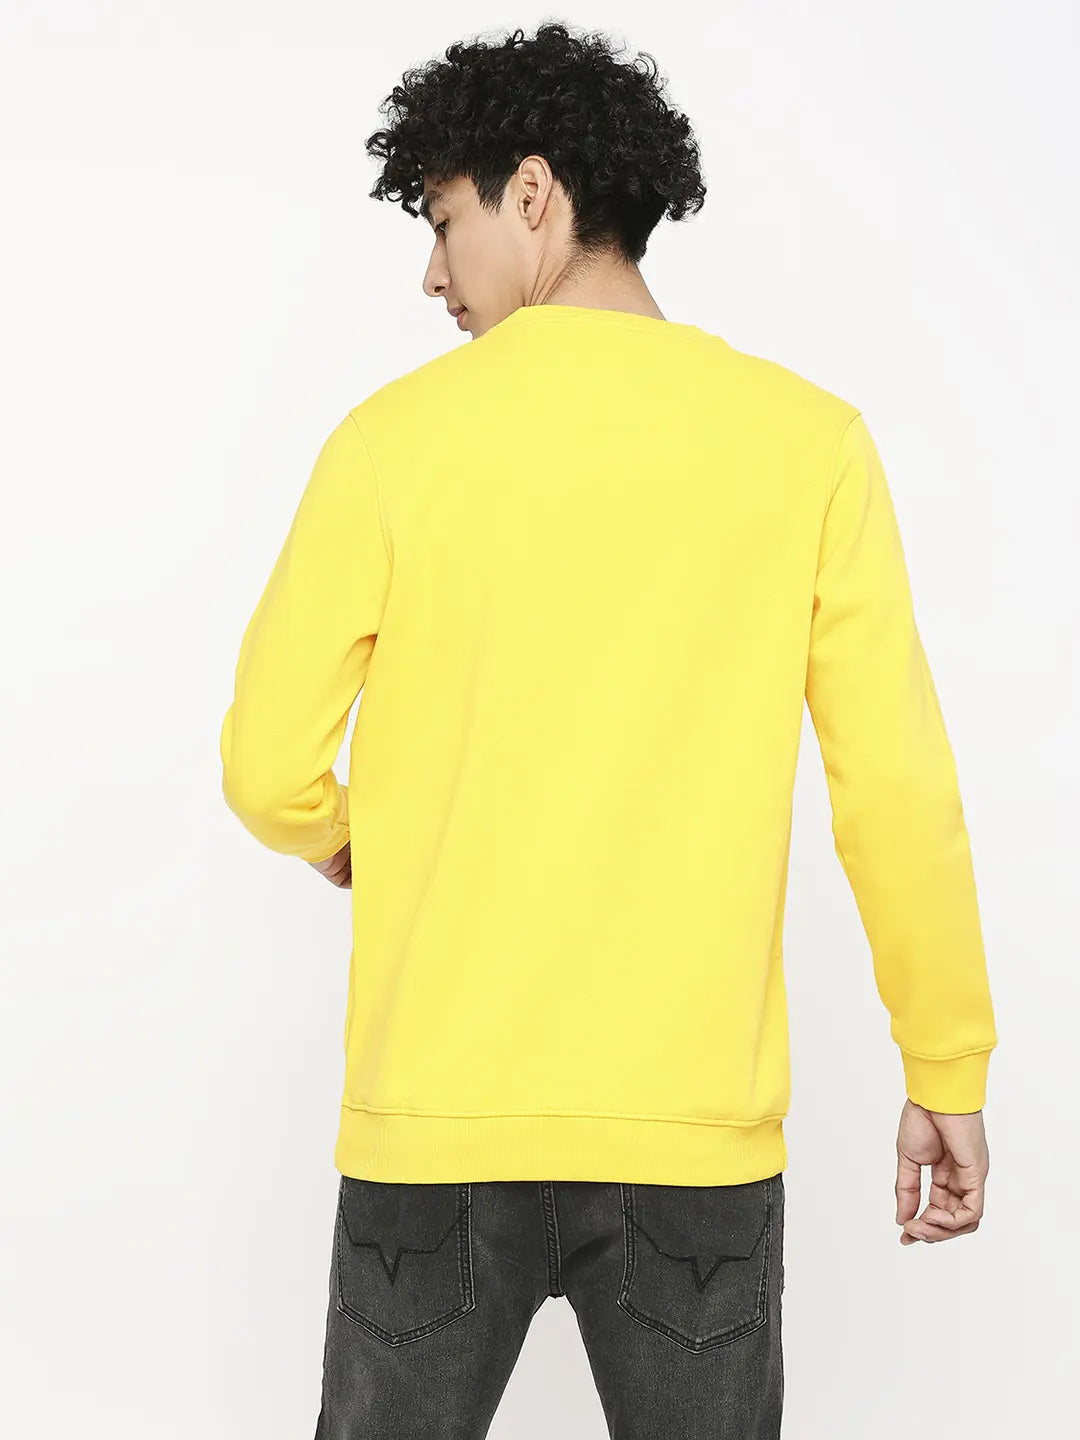 Spykar Chrome Yellow Cotton Full Sleeve Round Neck Sweatshirt For Men